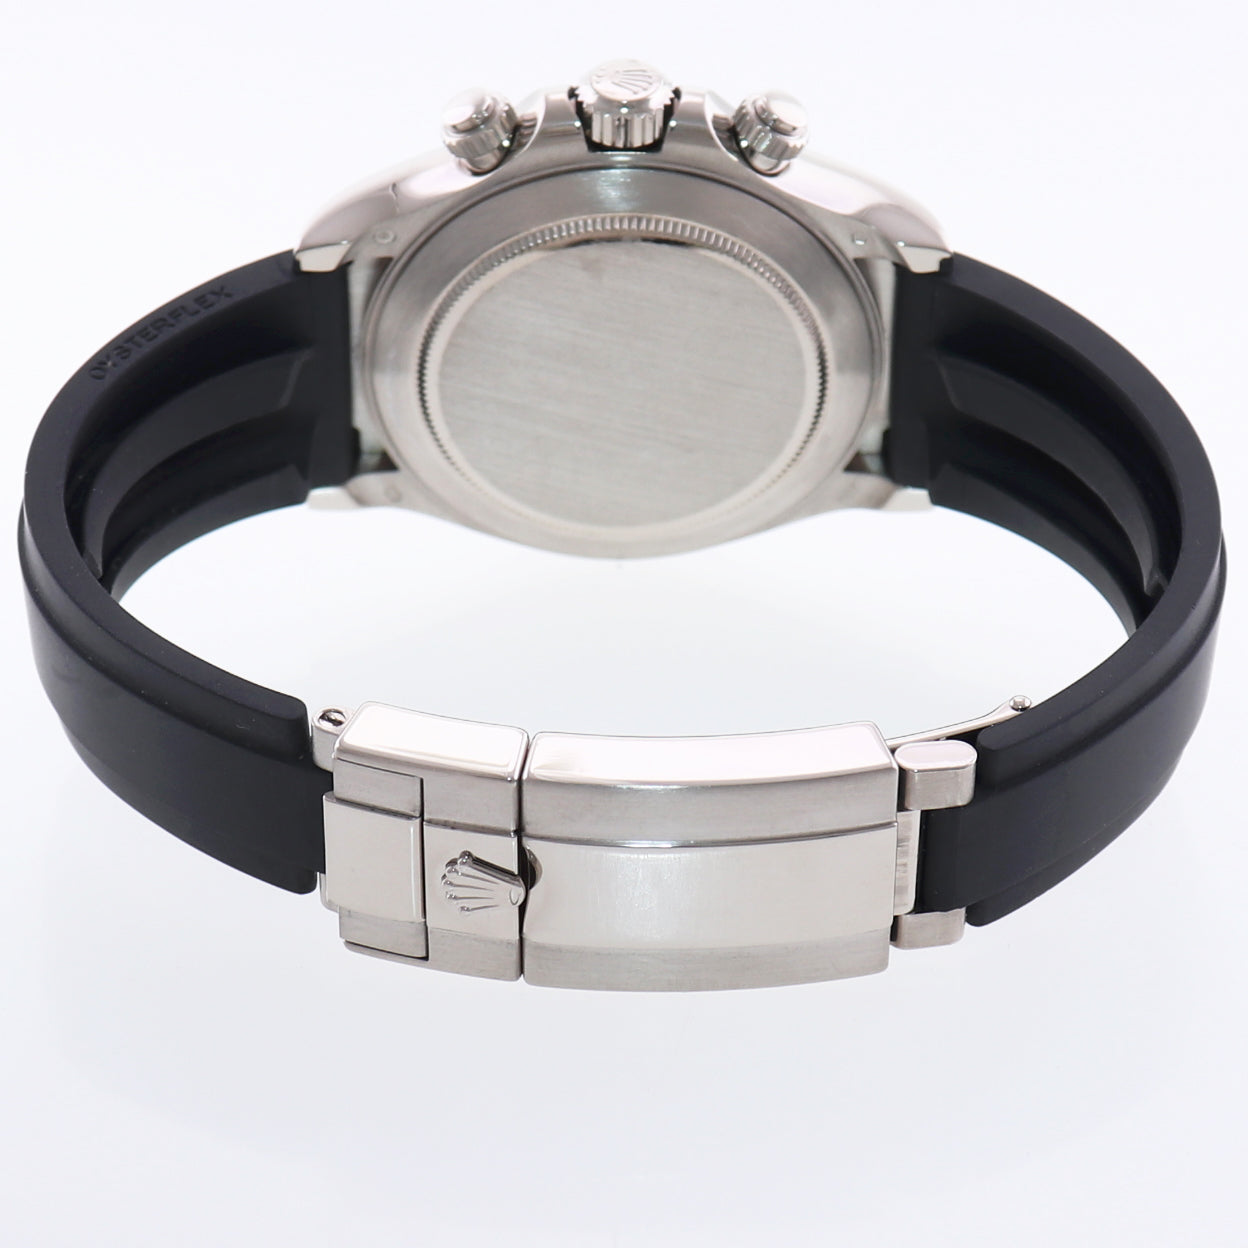 2020 MINT Rolex Daytona Oysterflex 116519LN White Gold Ceramic Diamond Watch